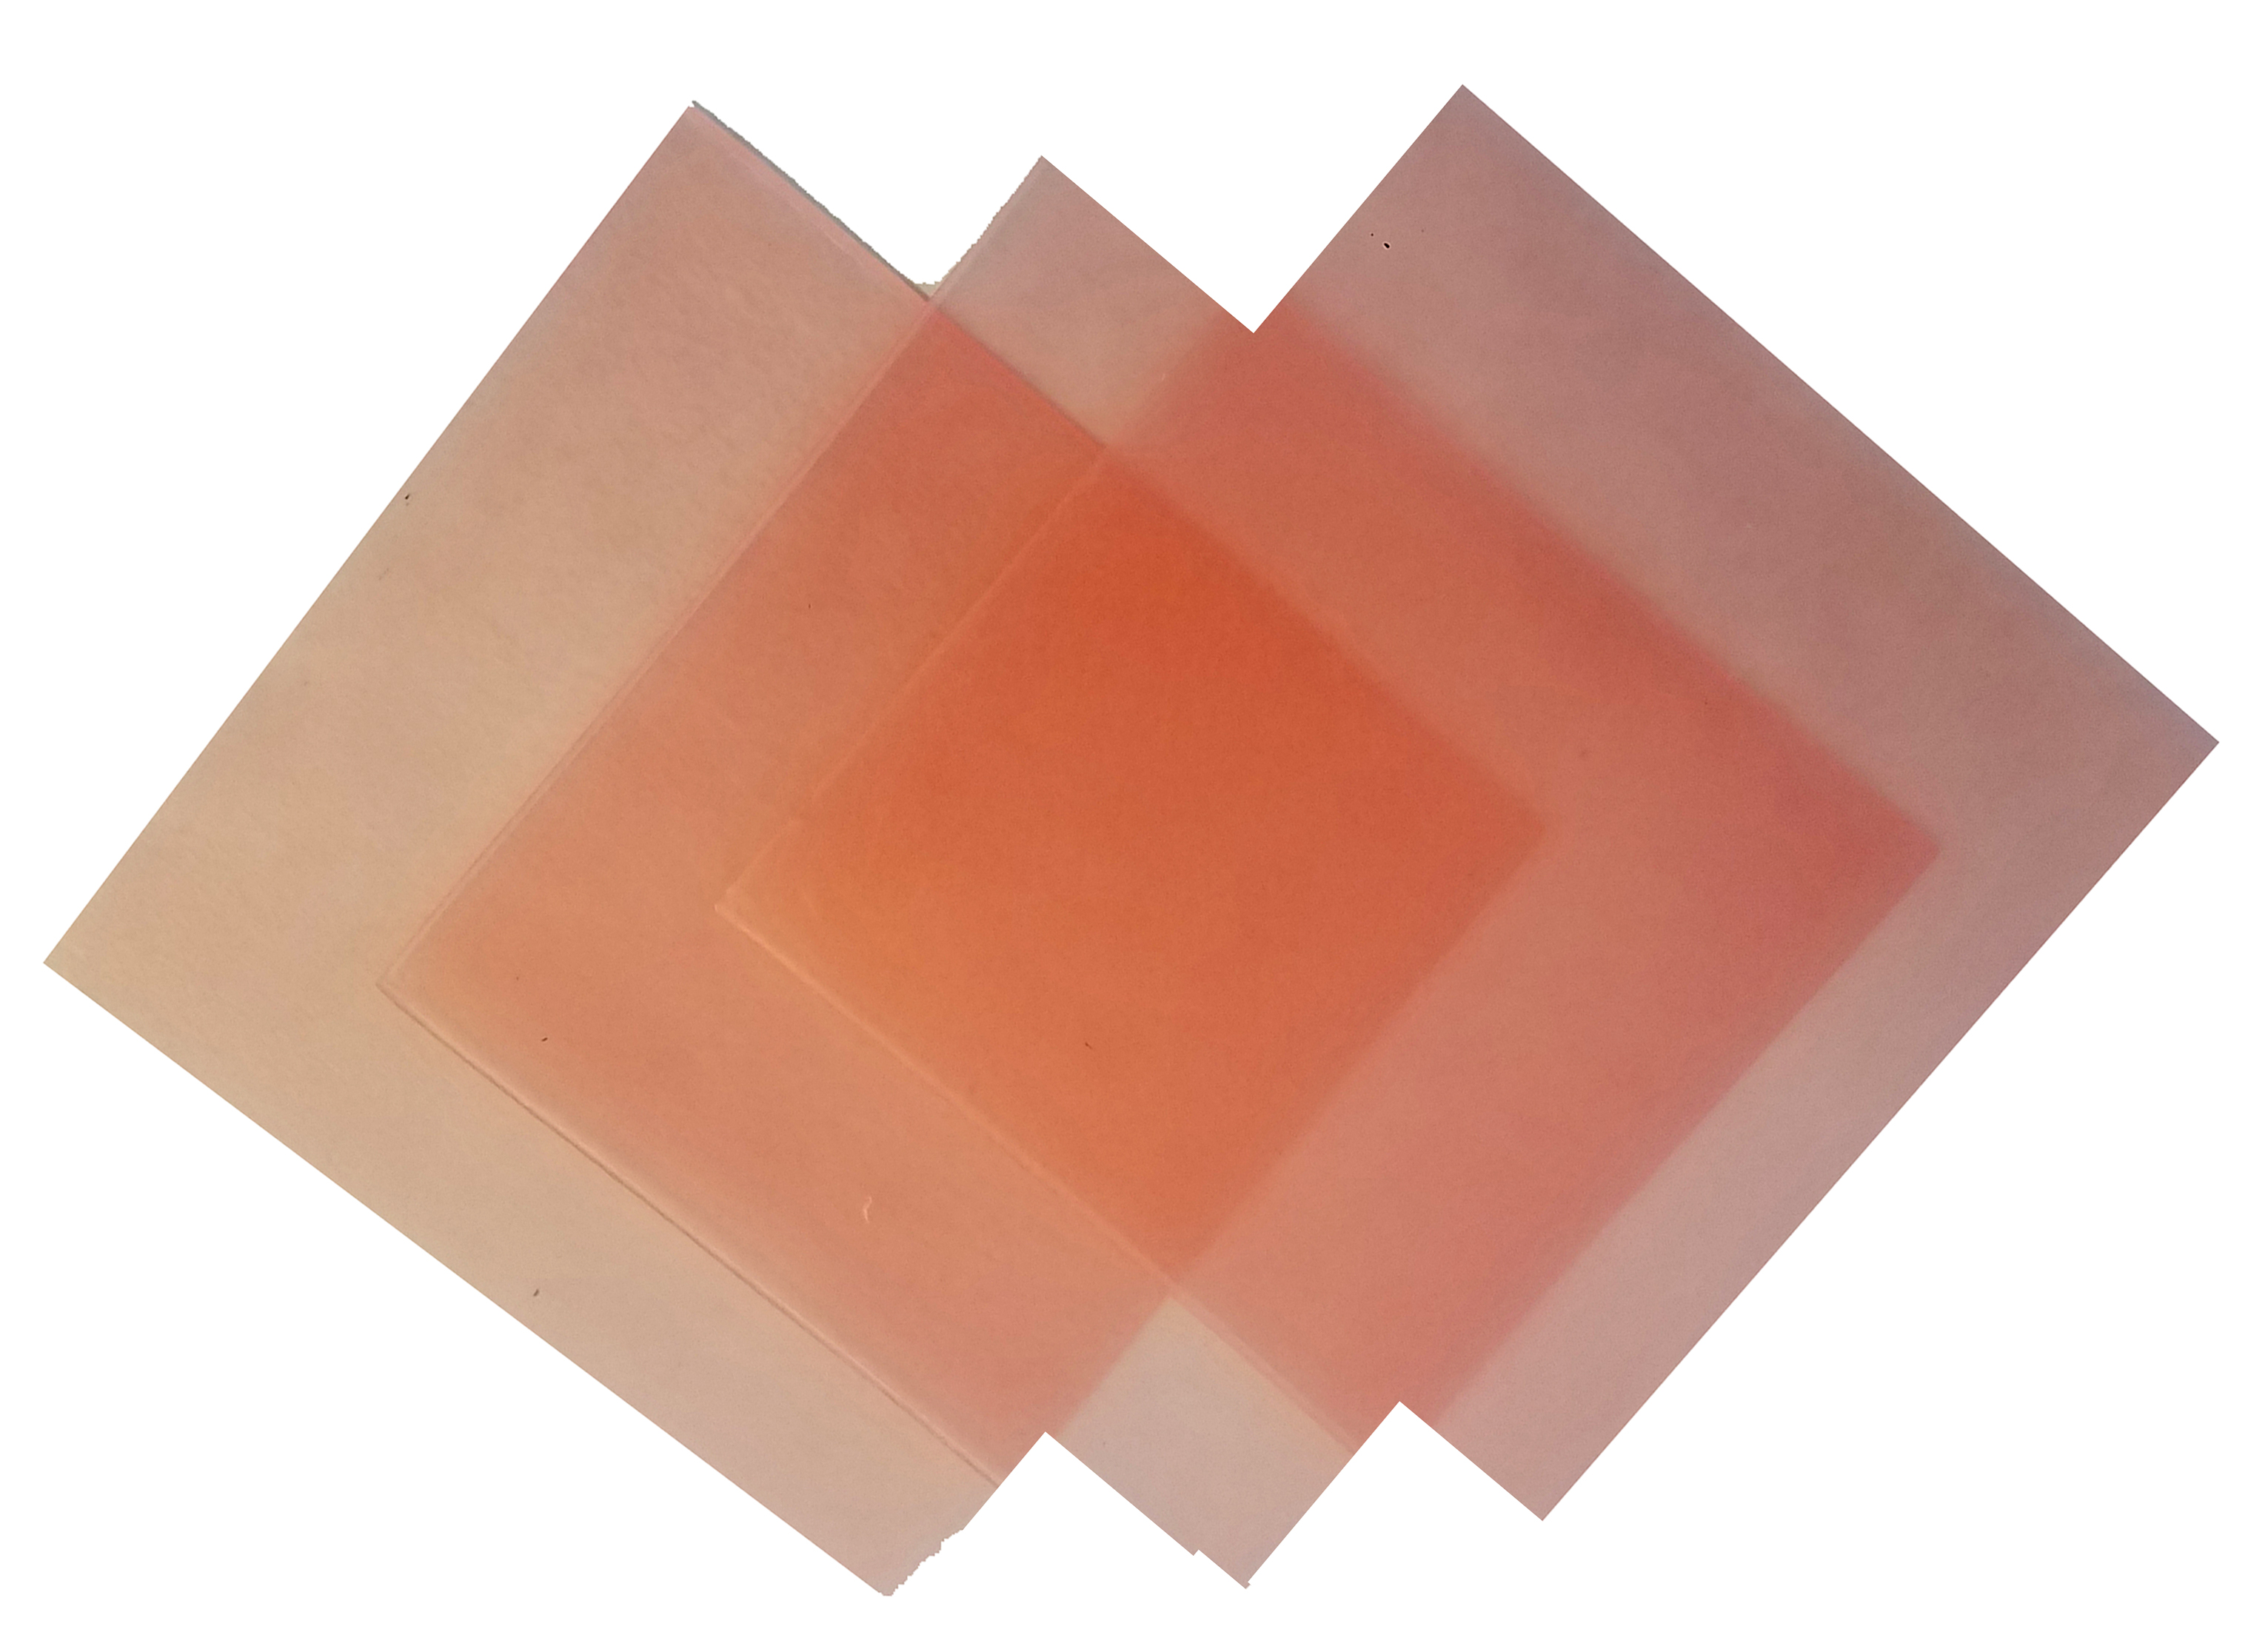 4"x4" sheet wax 23 gauge pink - Click Image to Close